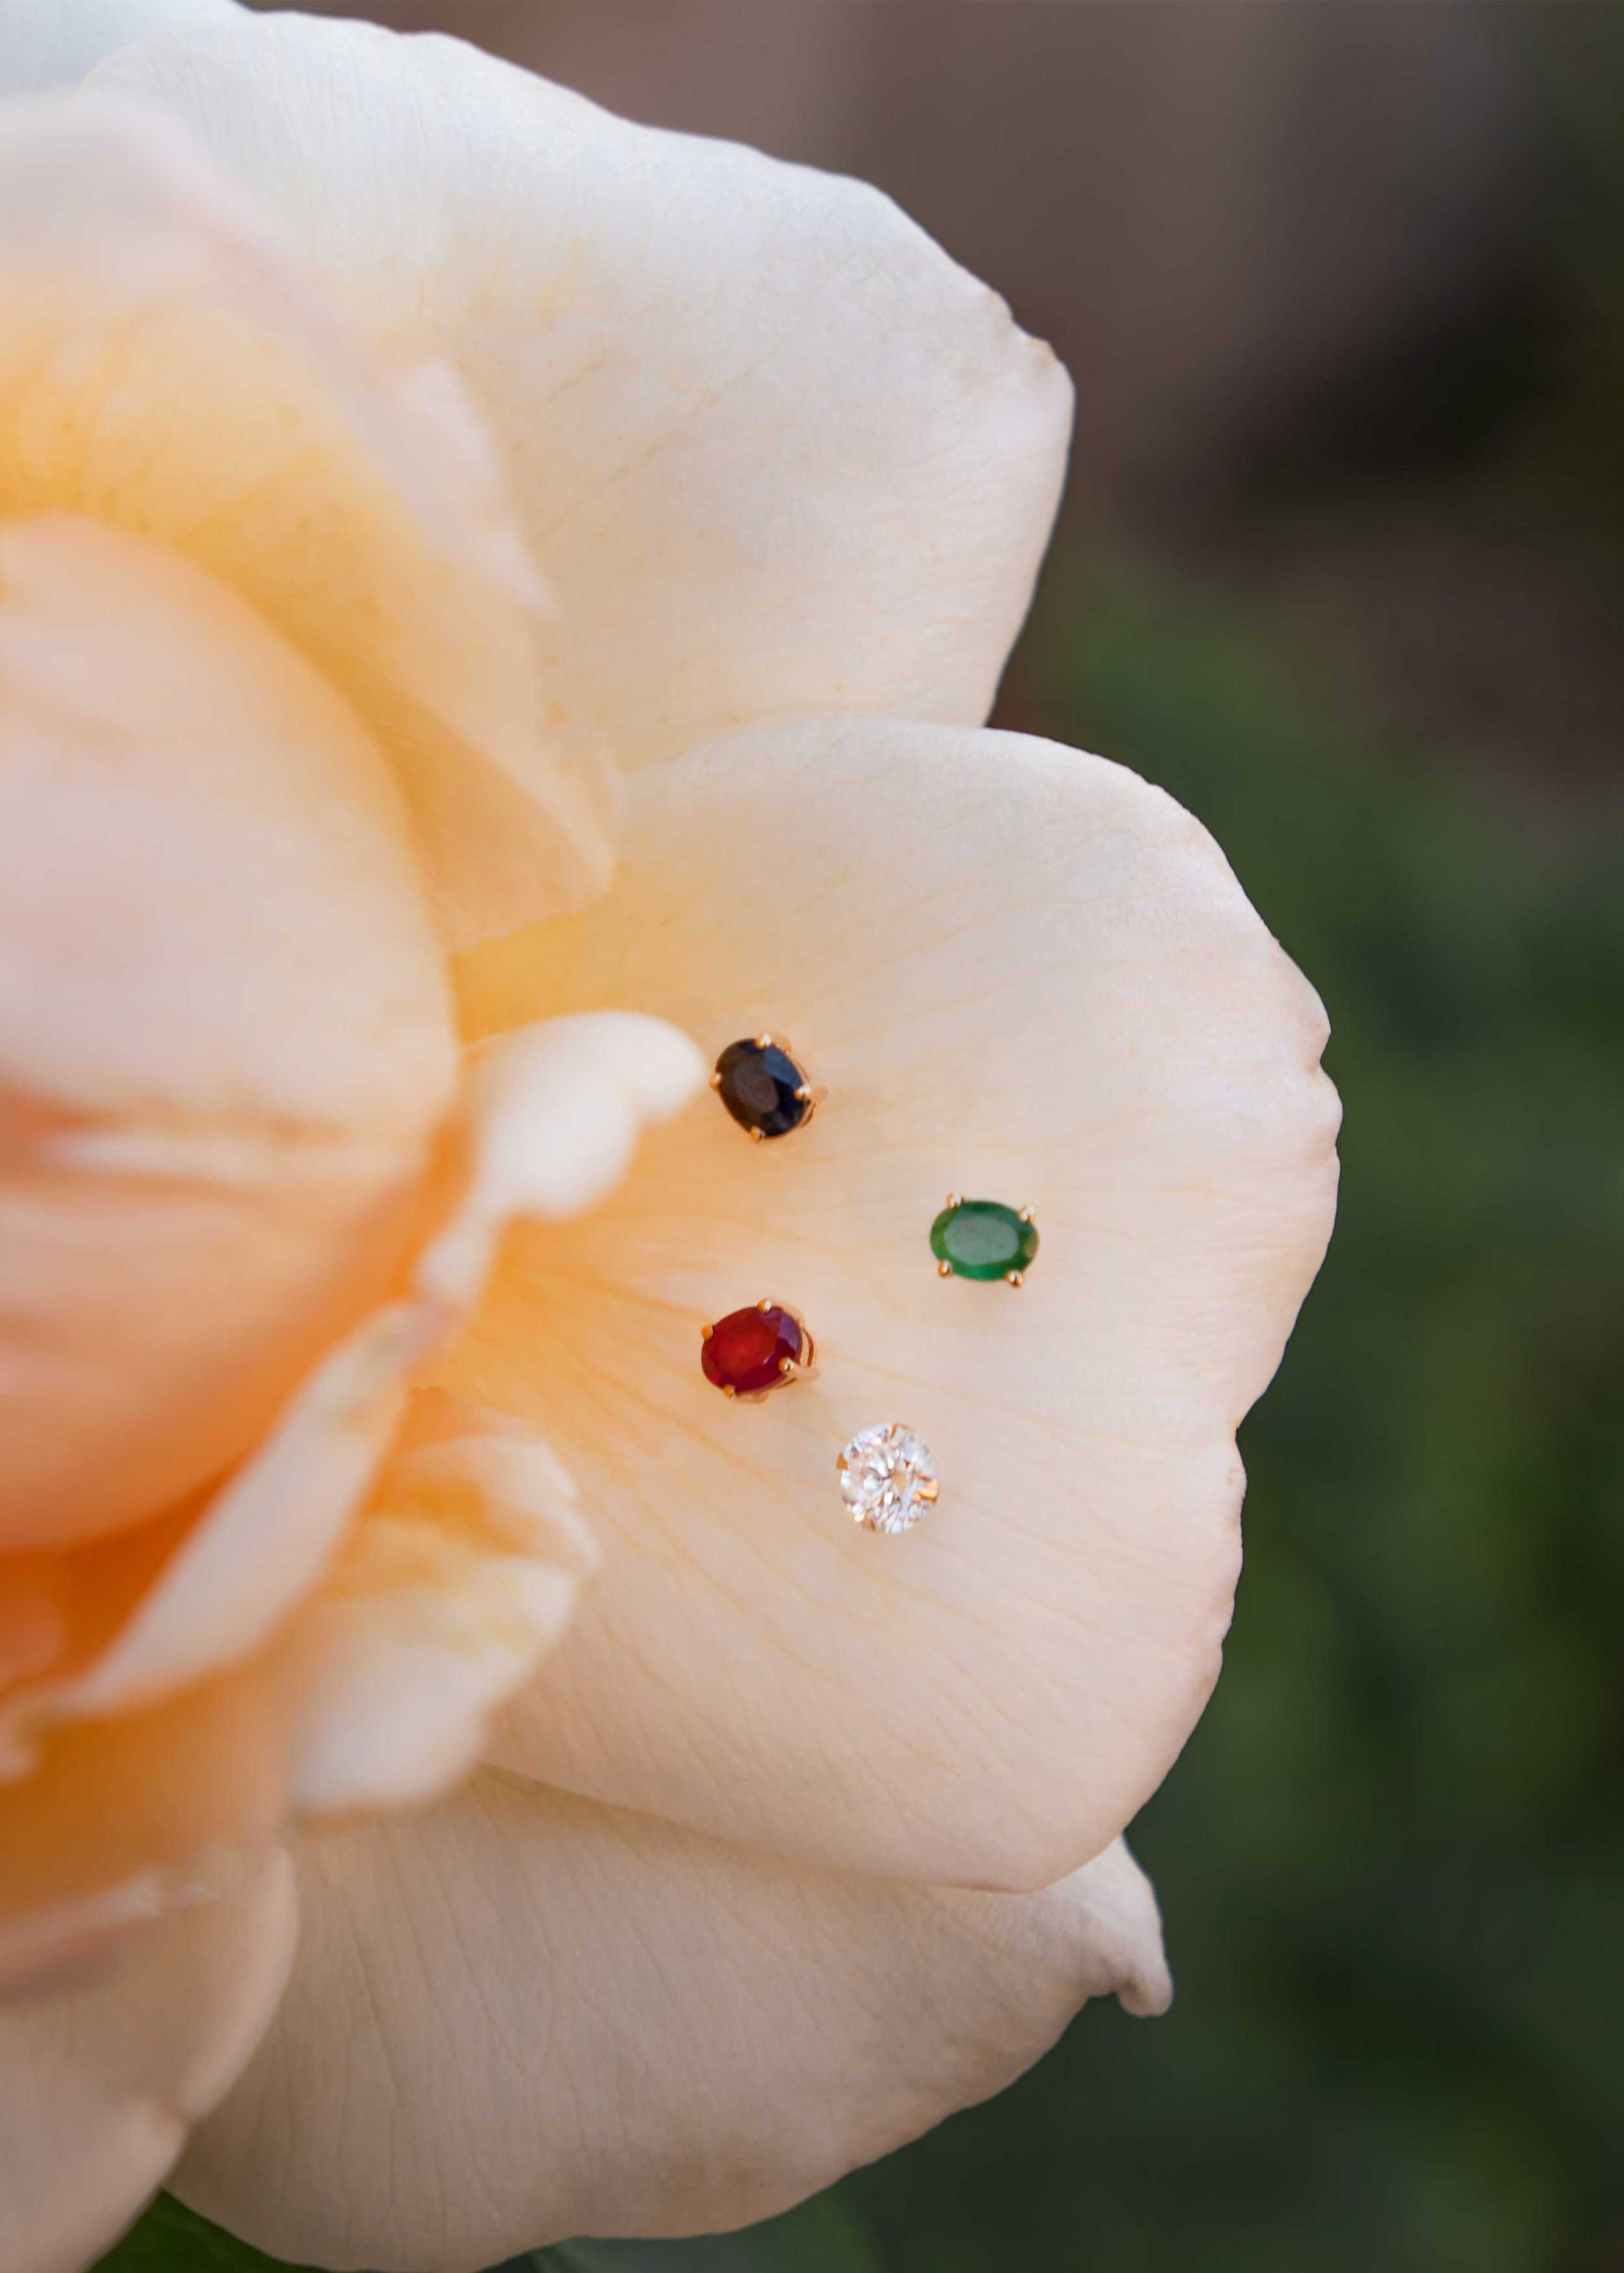 Gemstone earrings, cartilage dainty tiny studs for girls, best gift for teens girl